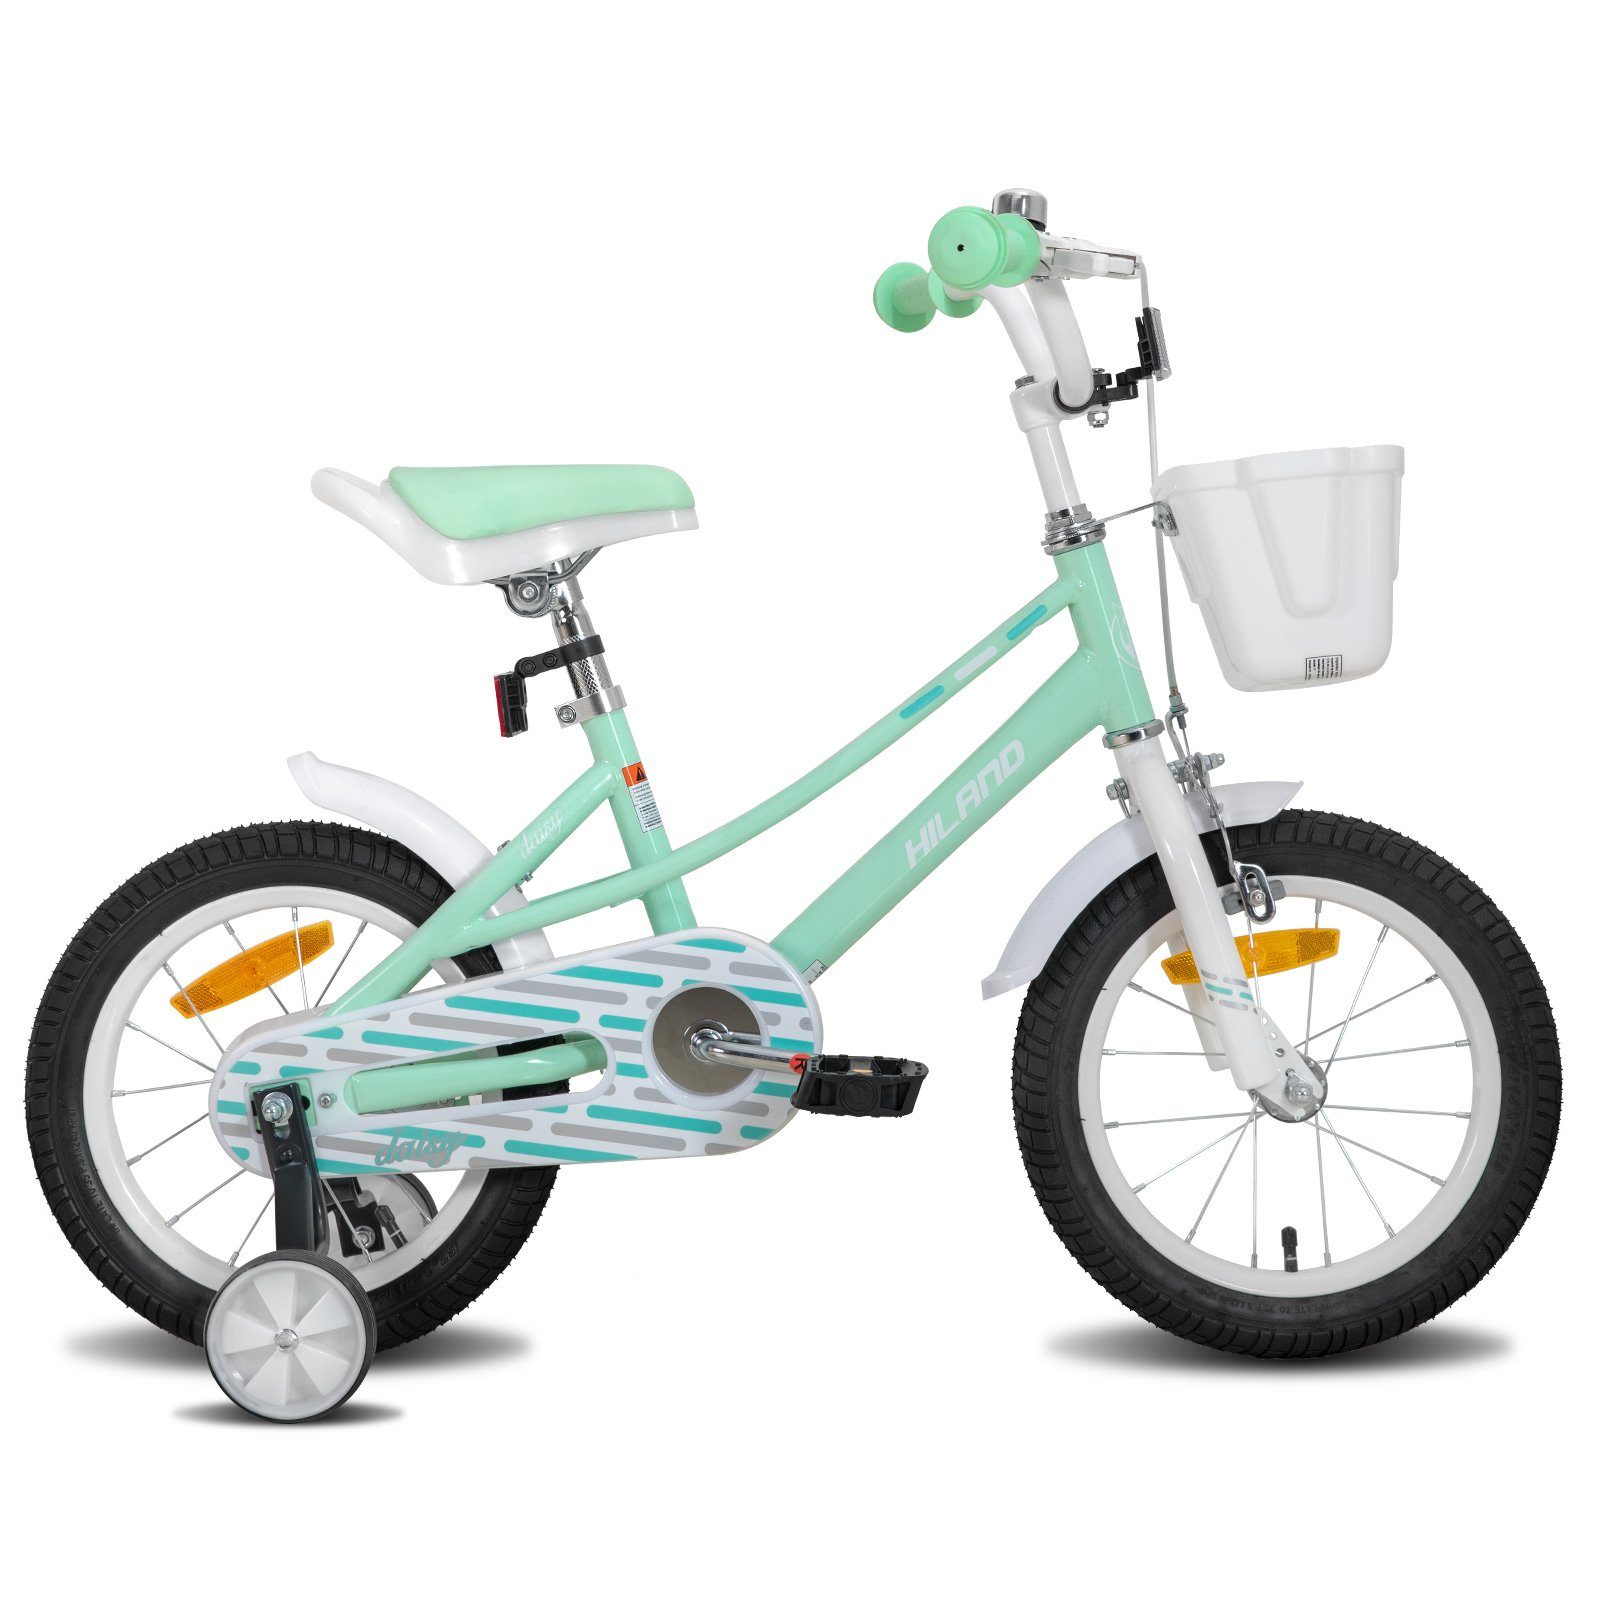 Grün 14 Zoll Kinderfahrrad Fahrrad für Kinder ab Jahr 3 Mit Rückbremse Blau 